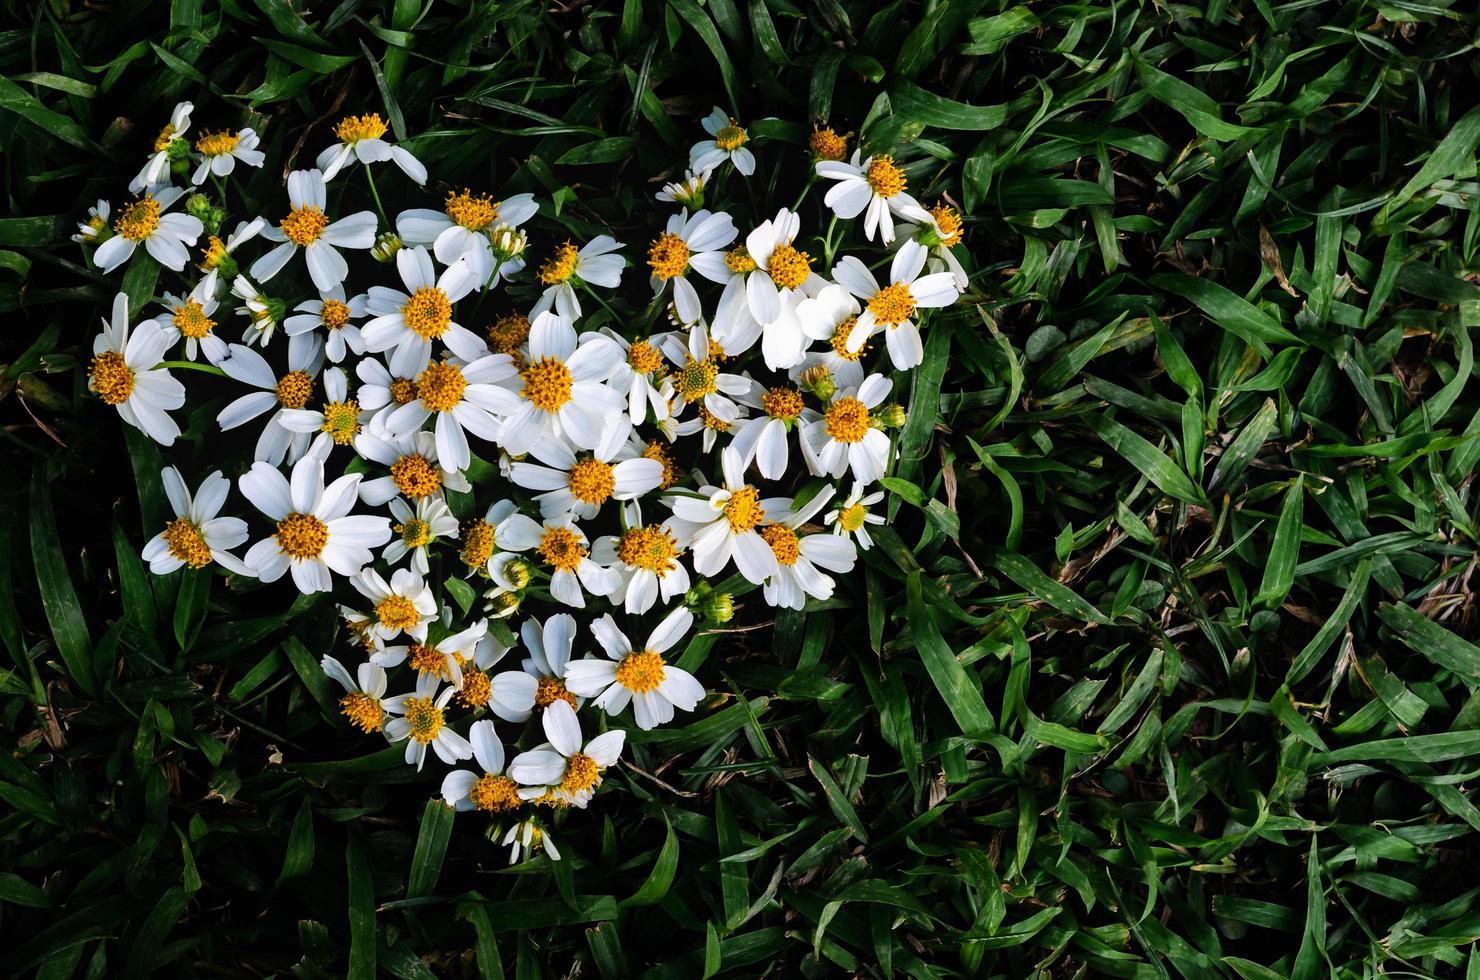 Spanish needles or Bidens alba flowers set as love shape on green grass background. photo